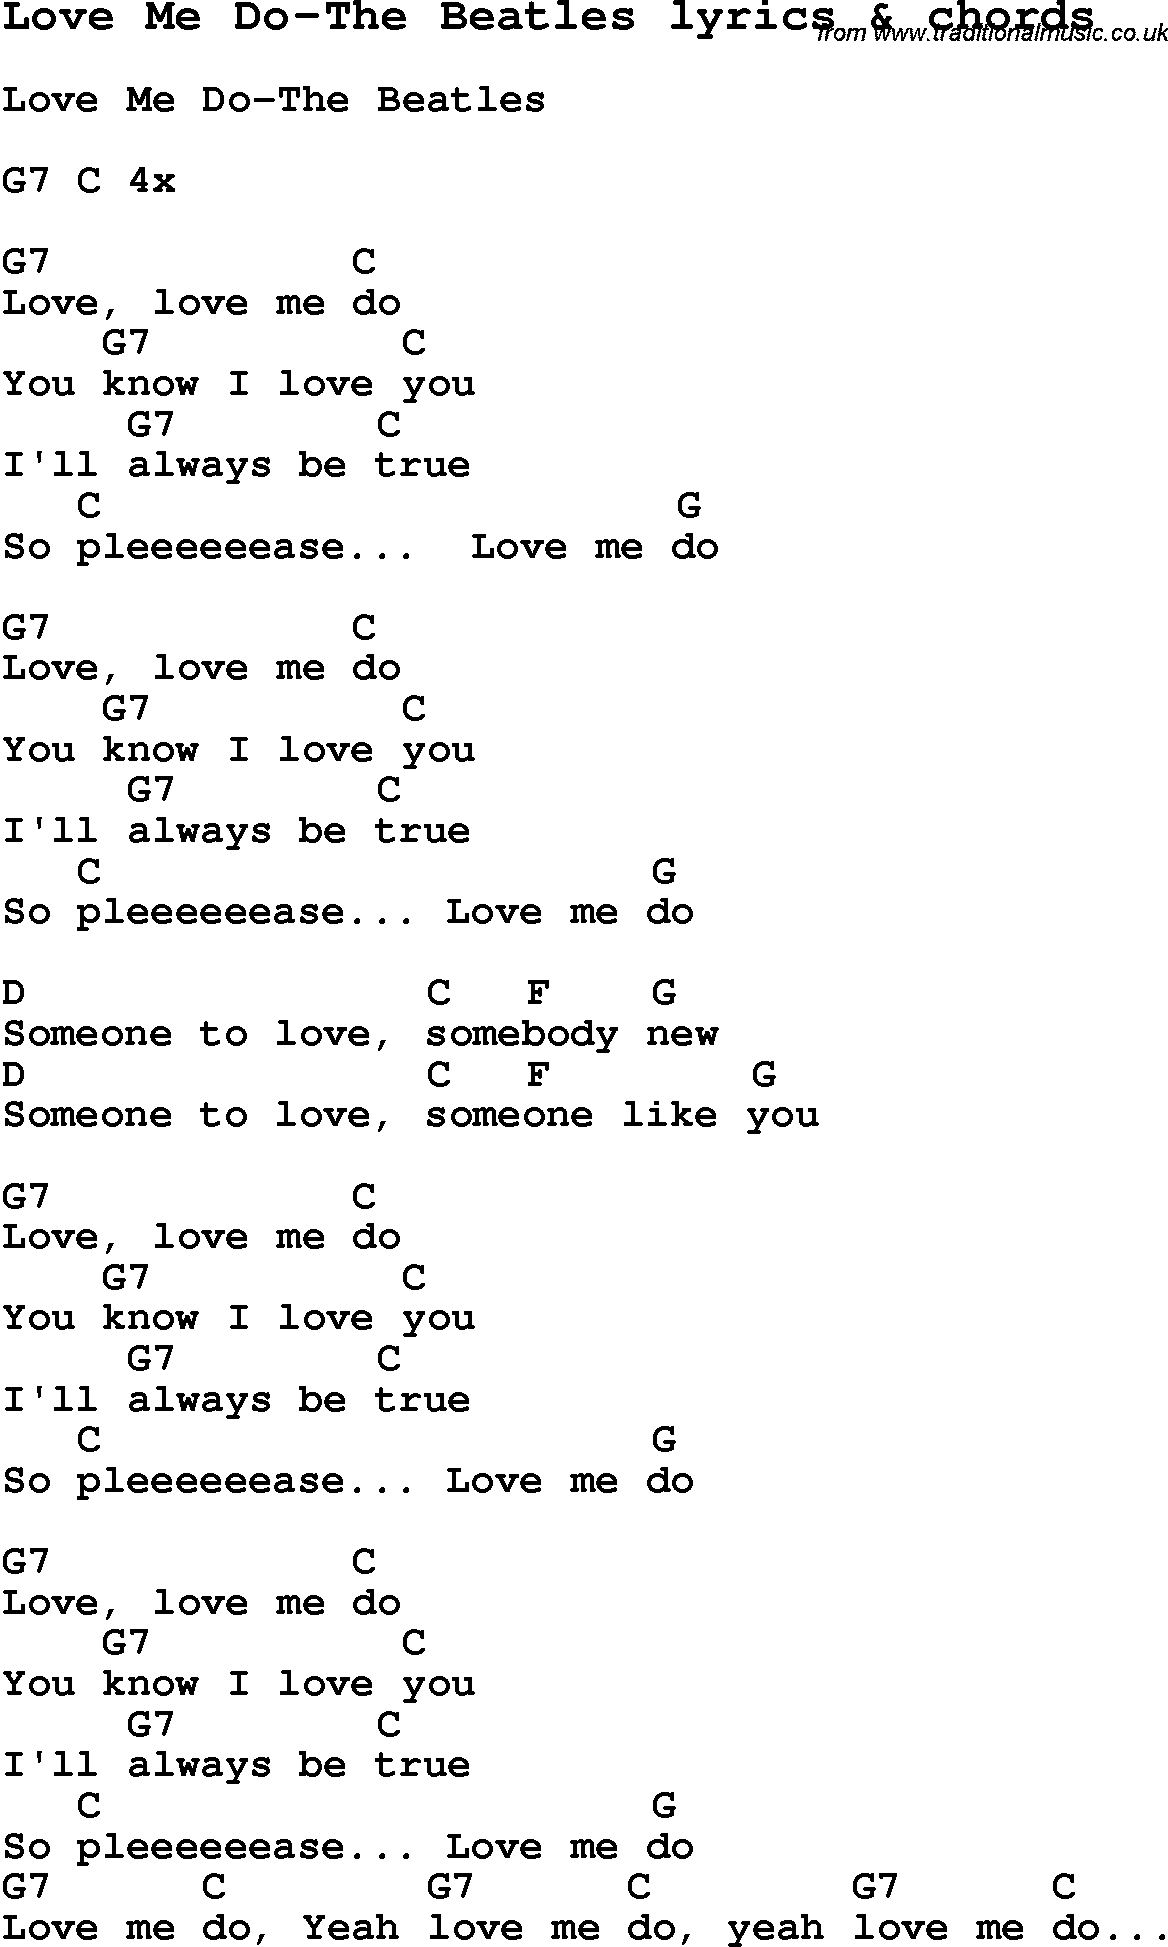 Love Song Lyrics for: Love Me Do-The Beatles with chords for Ukulele, Guitar Banjo etc.